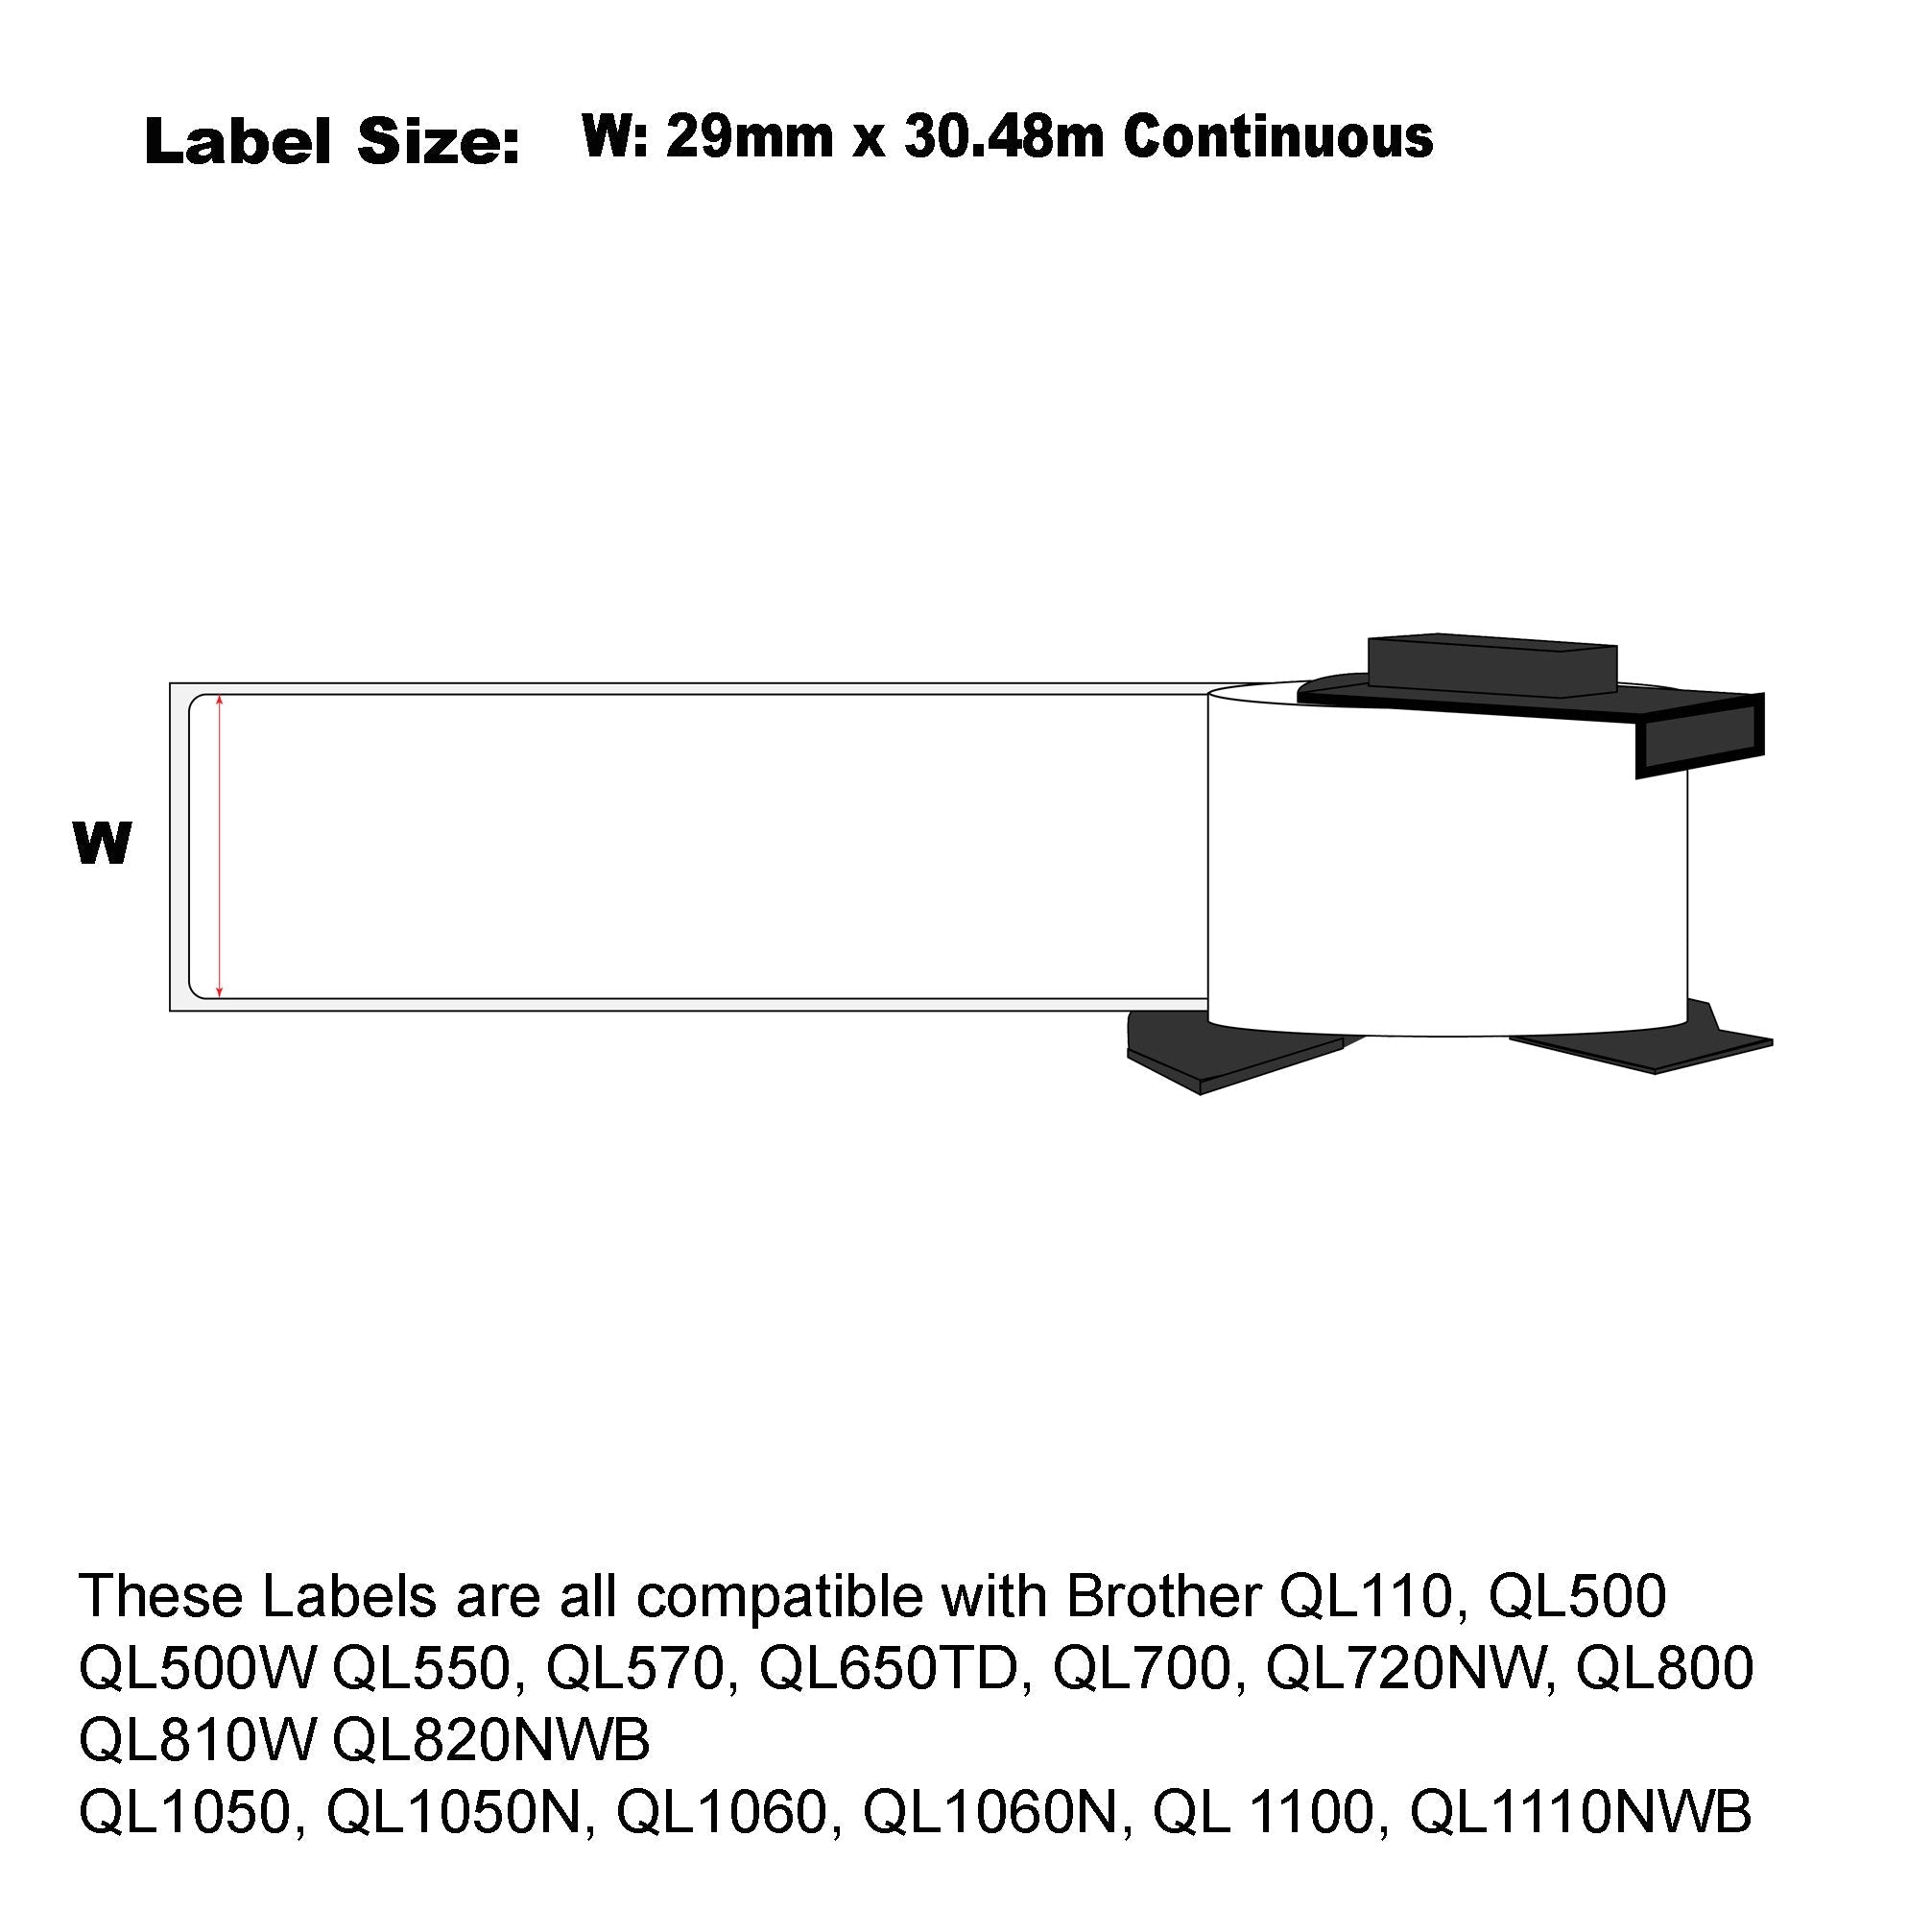 Compatible Brother DK-22210 Labels 29mm x 30.48m Continuous Length-32 Rolls Bulk Buy